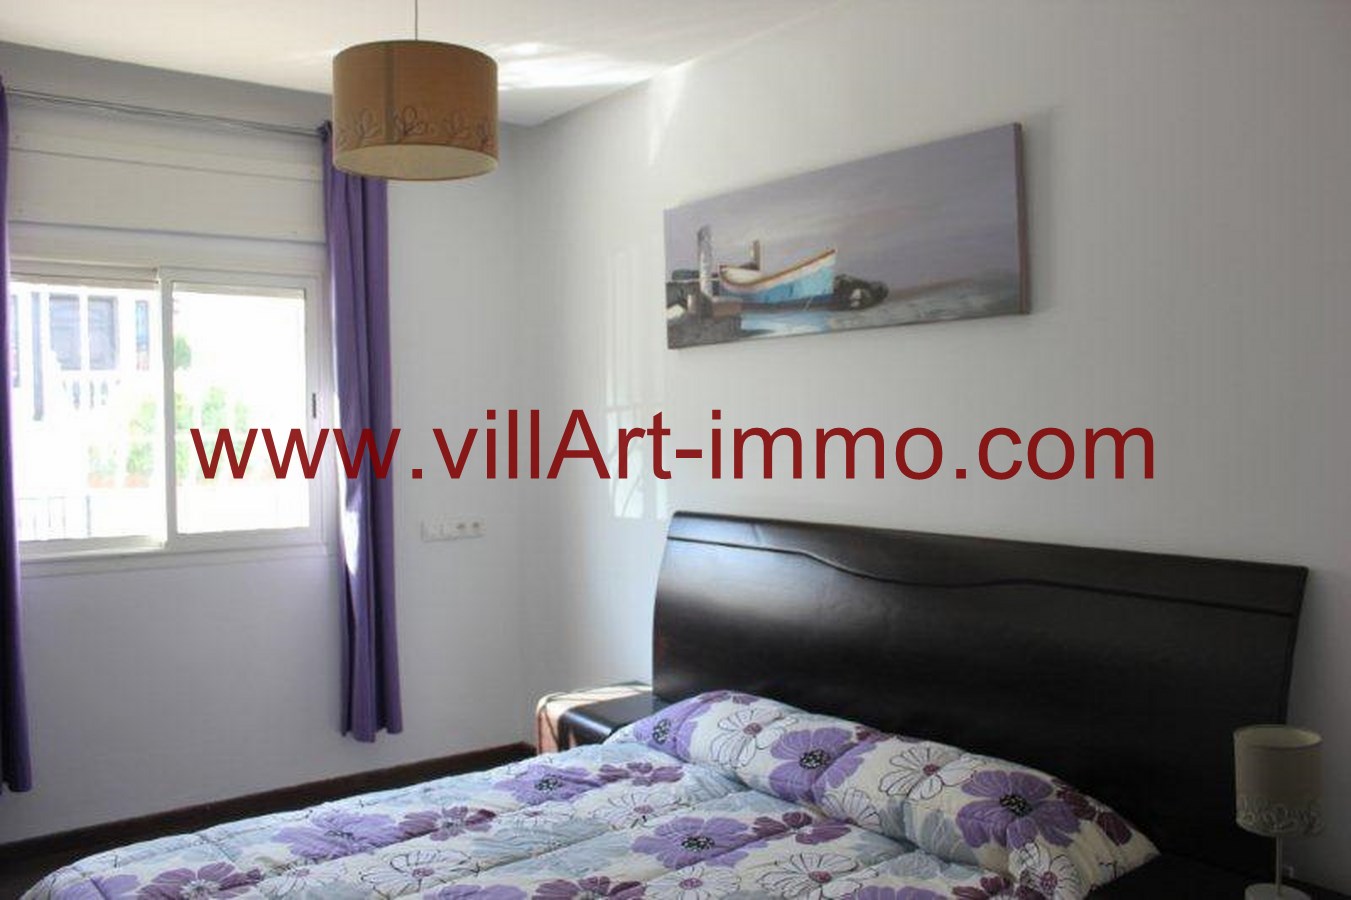 6-Location-Appartement-Meublé-Tanger-Chambre 1-L720-Villart immo